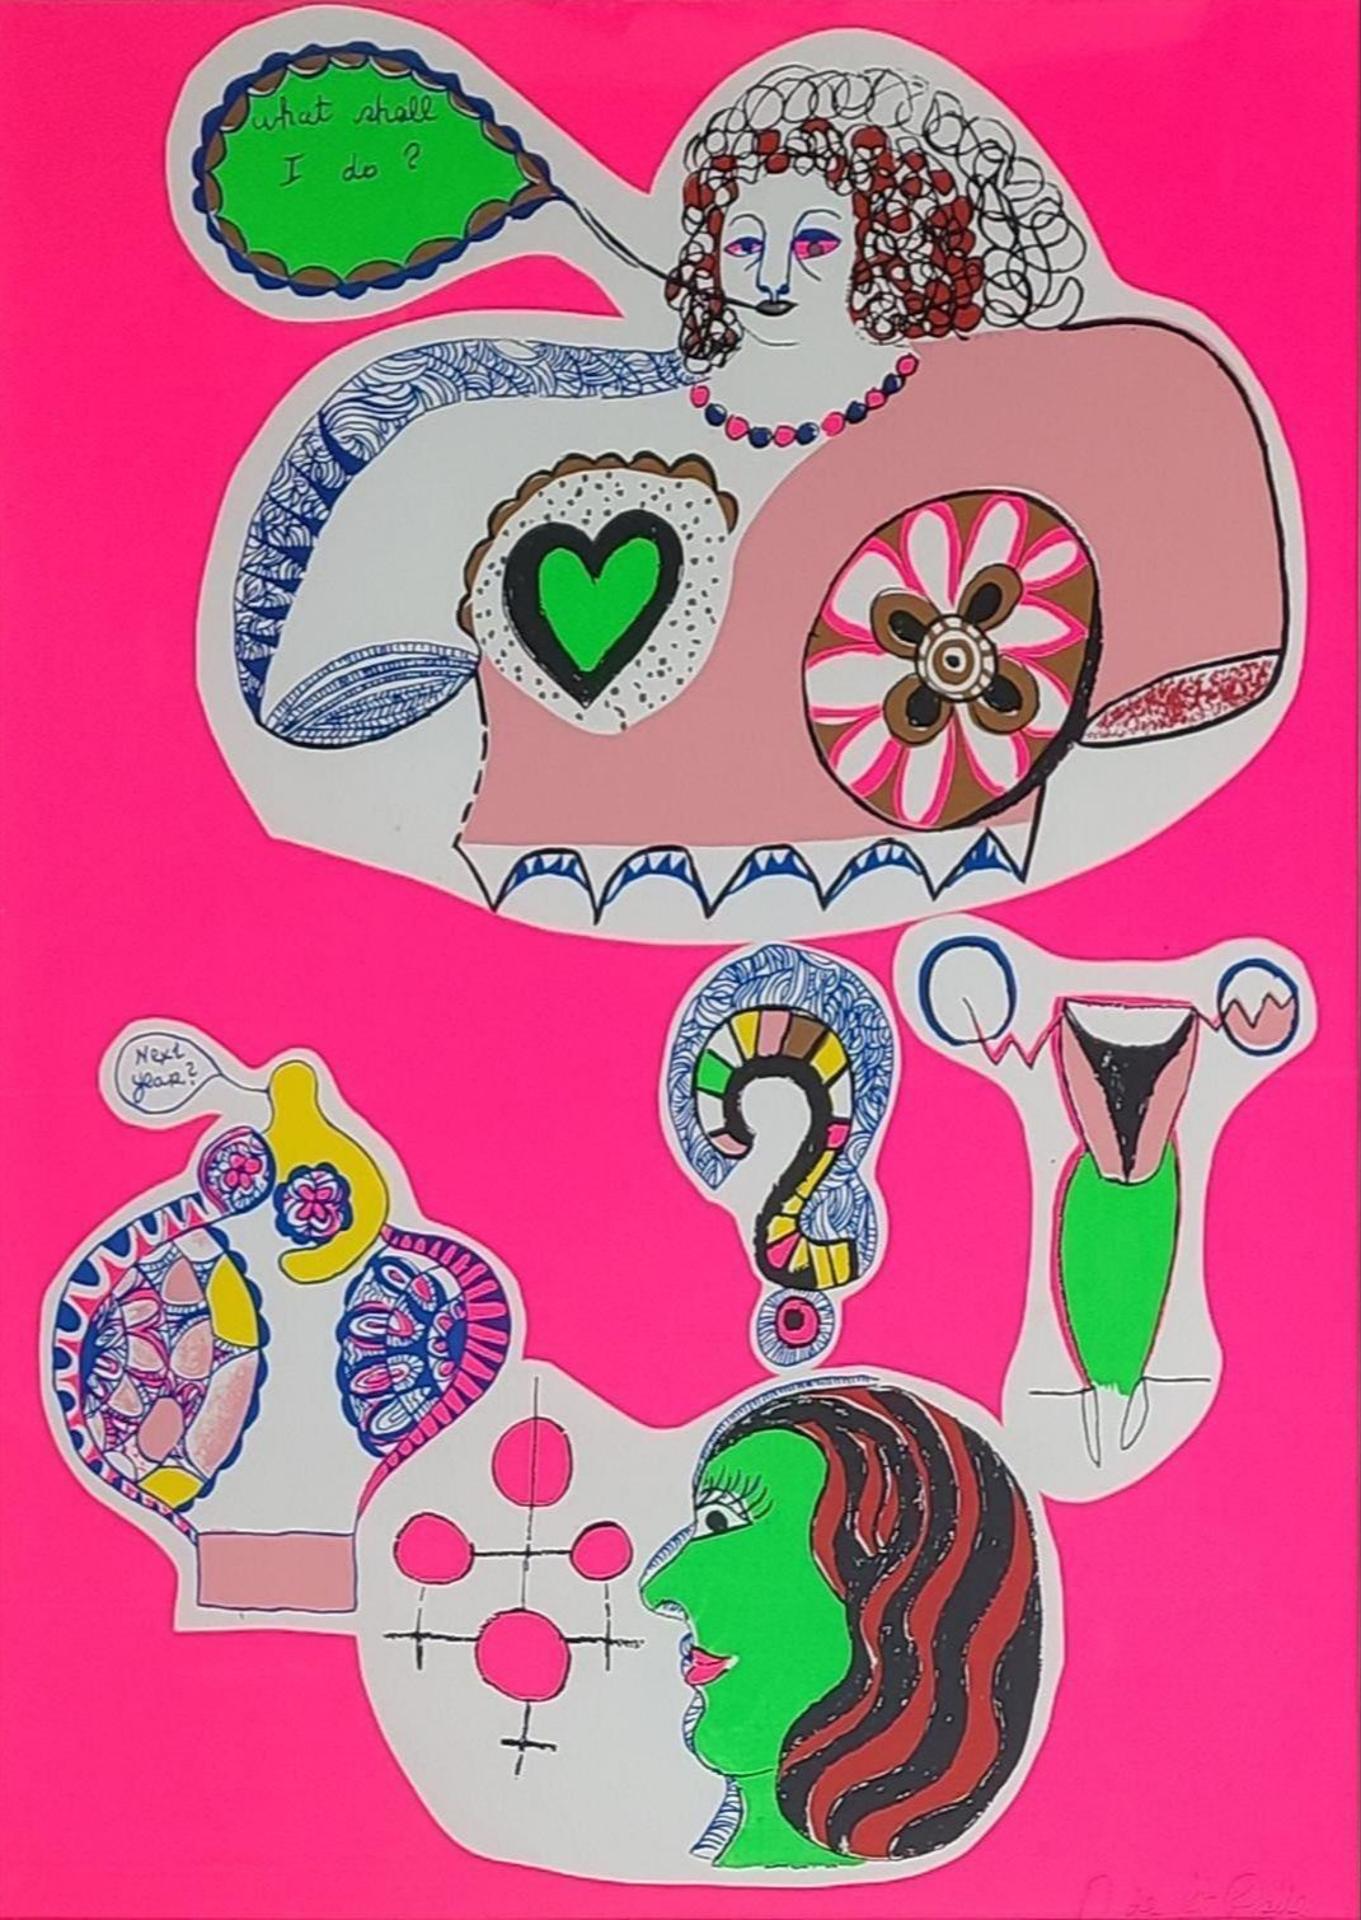 Niki de Saint Phalle (1930-2002) - What Shall I Do, 1970